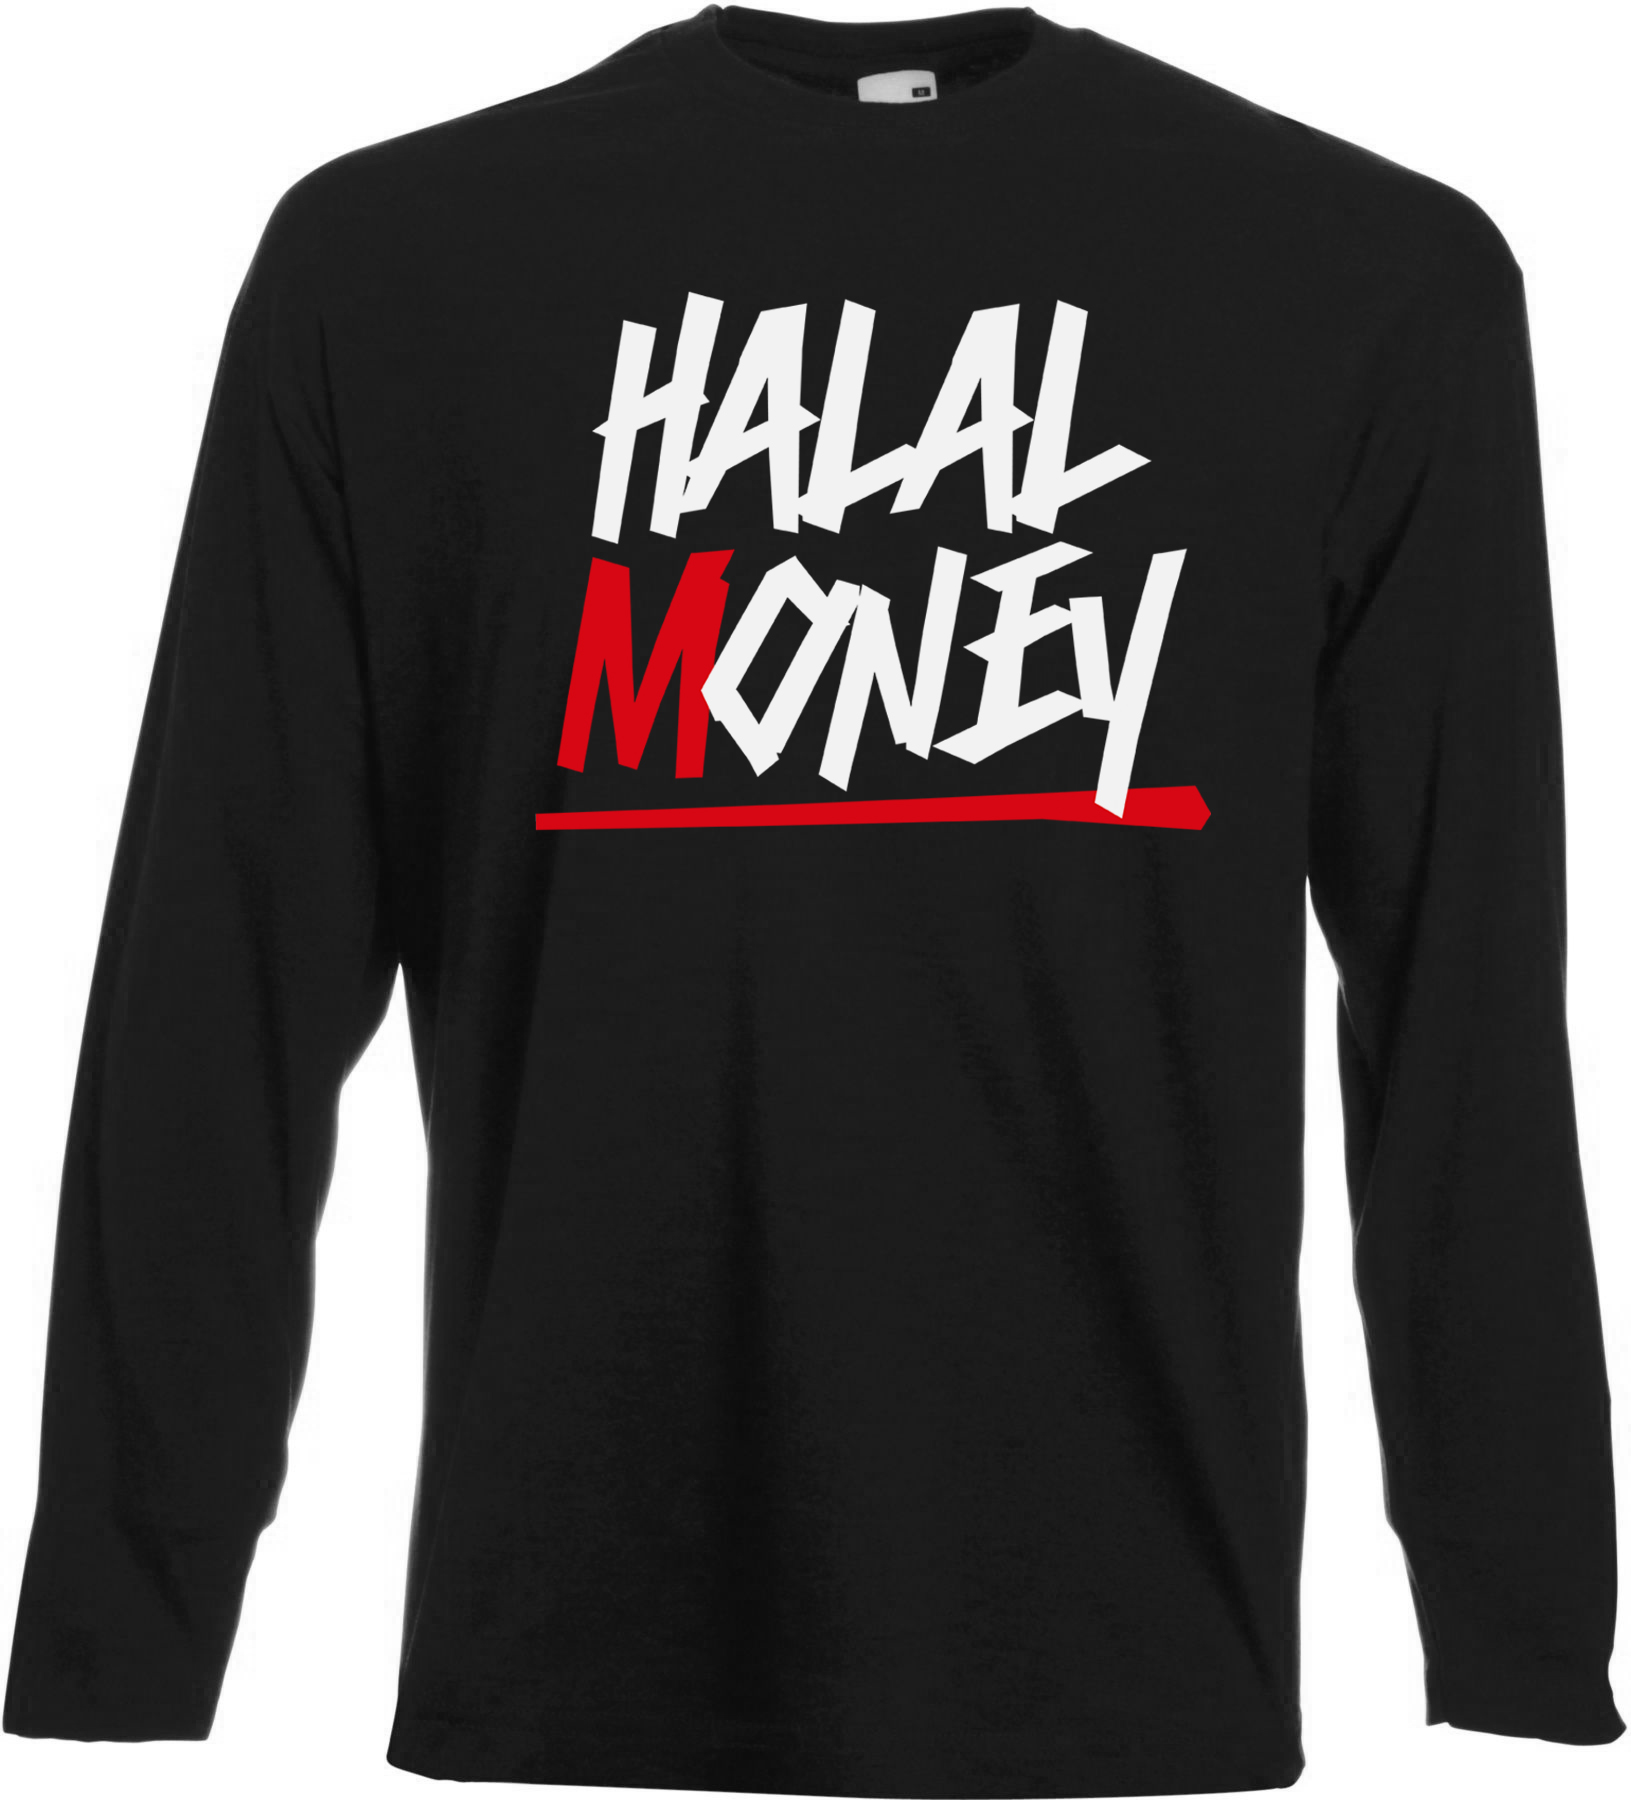 Halal Money Langarm T-Shirt - Muslim Halal Wear Black 